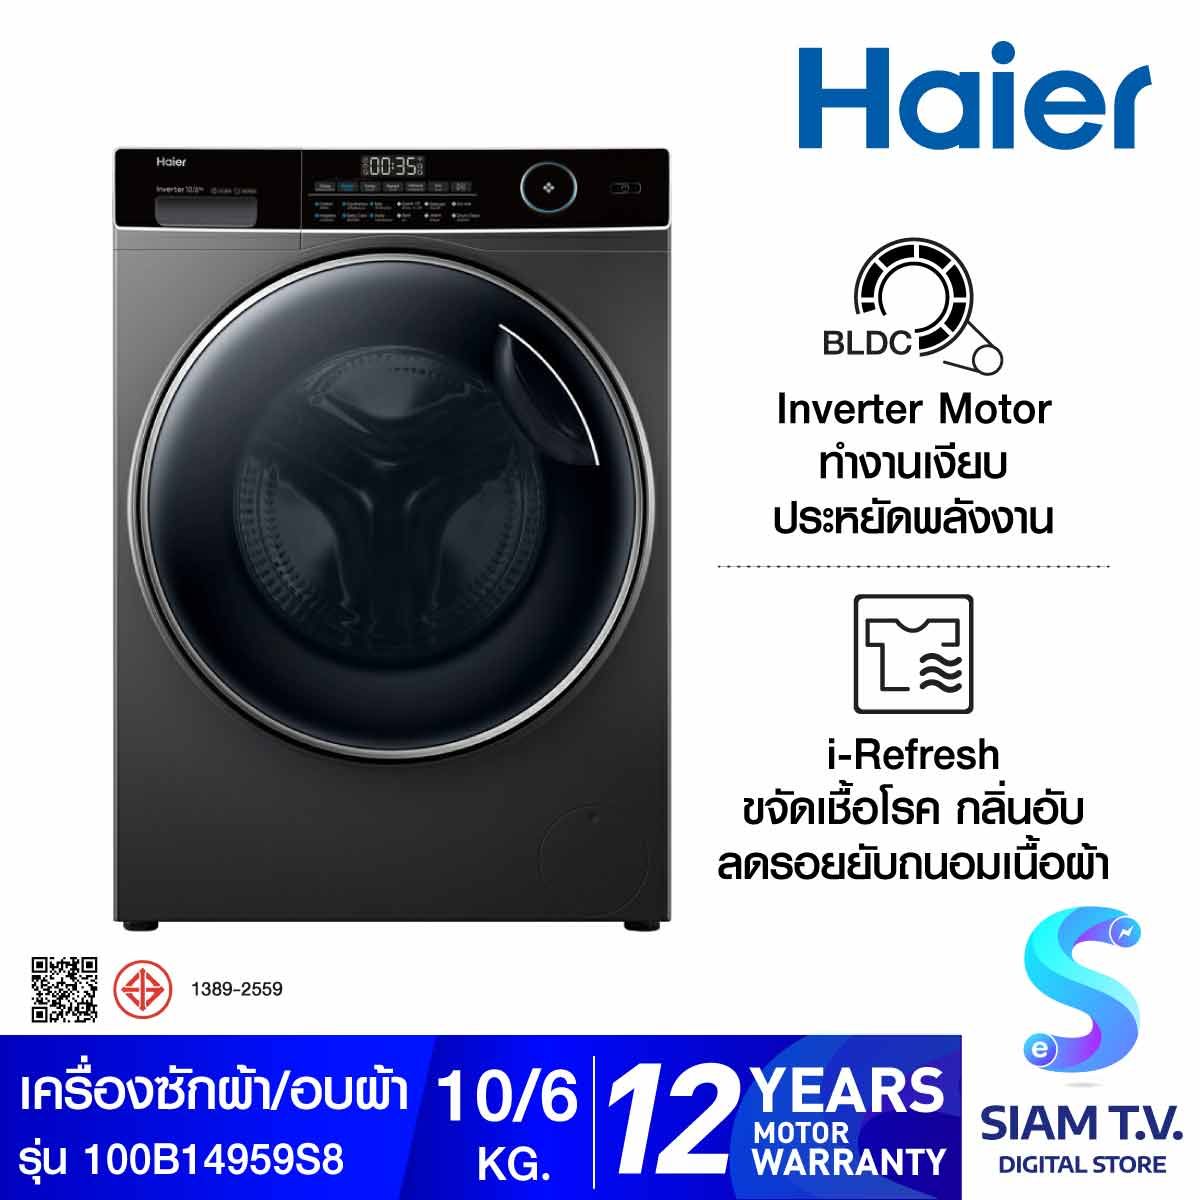 HAIER เครื่องซักอบผ้าฝาหน้า 10/6 กก. INVERTER สีดำ รุ่น HWD100-BP14959S8